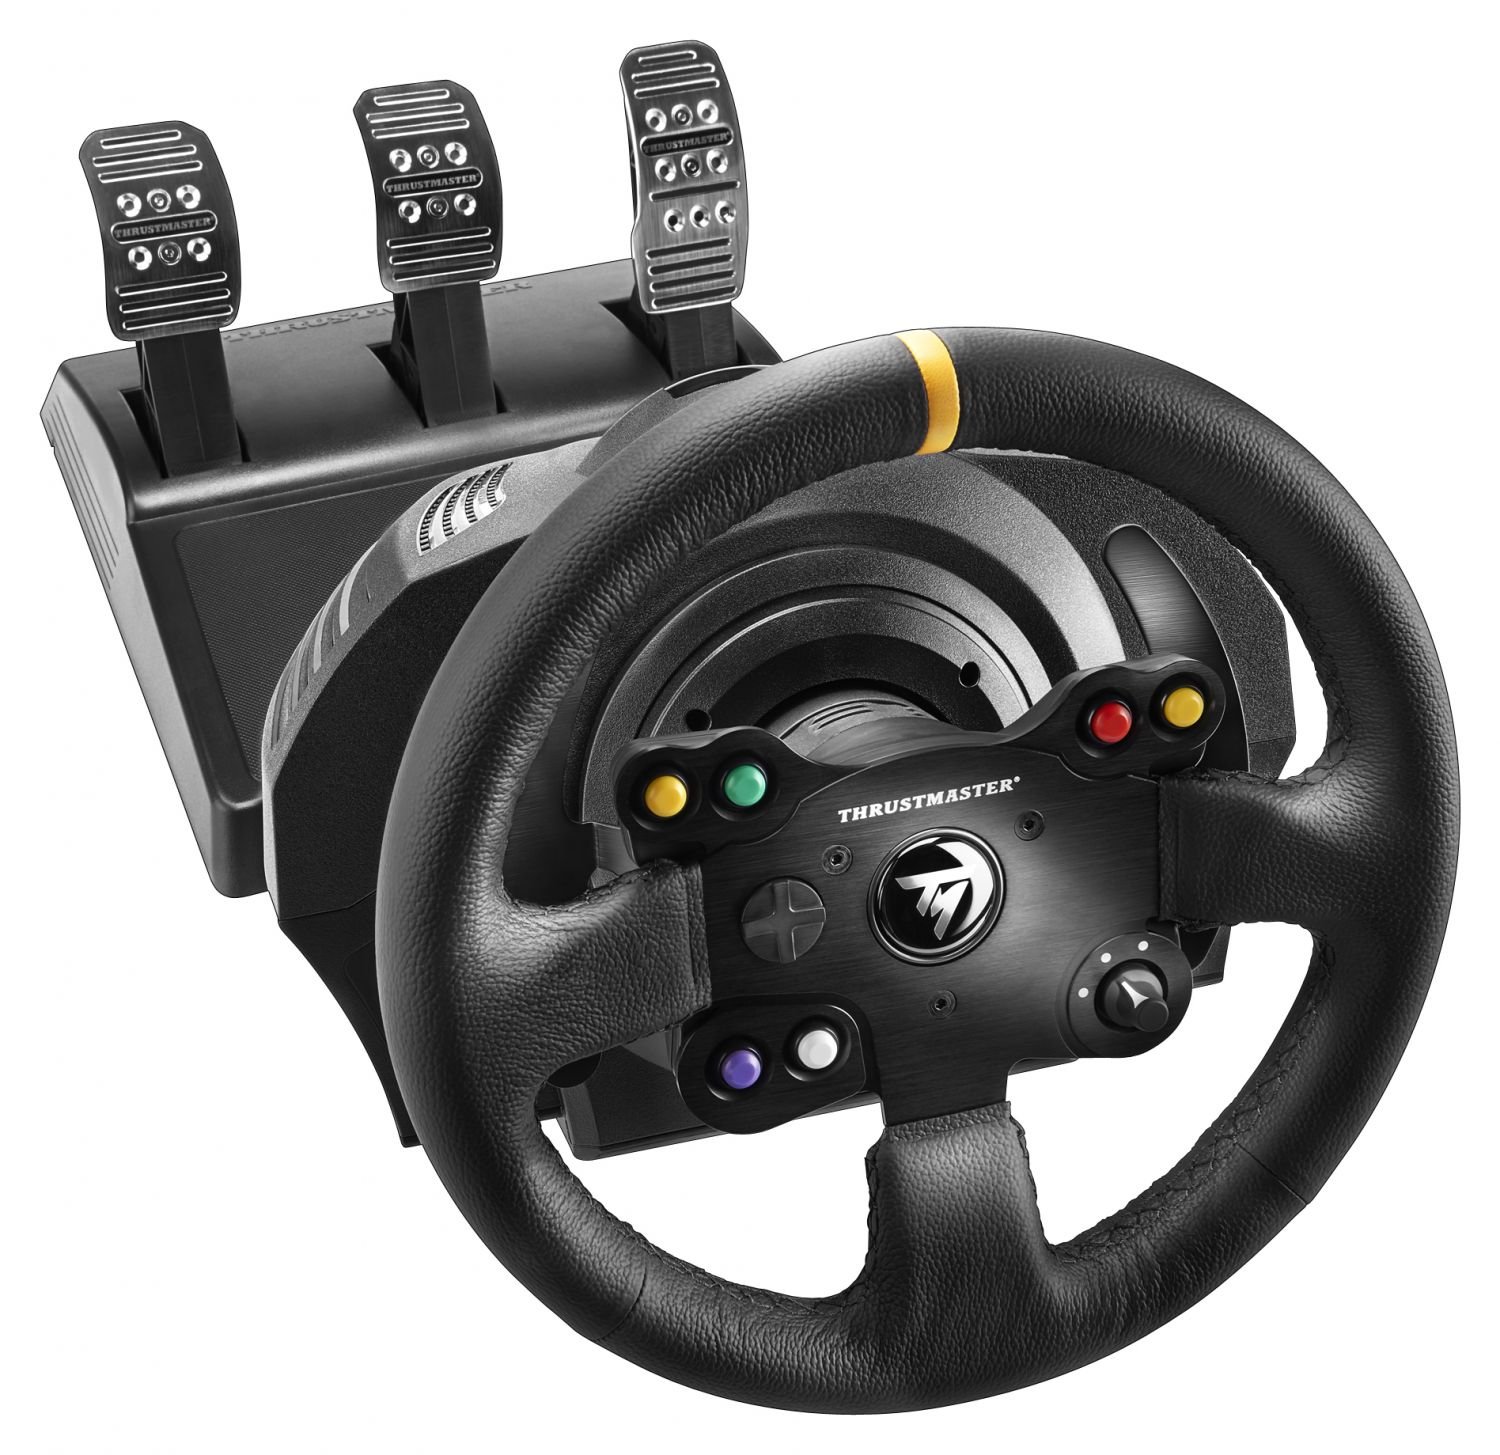 Thrustmaster - TX Racing Wheel - Leather Edition